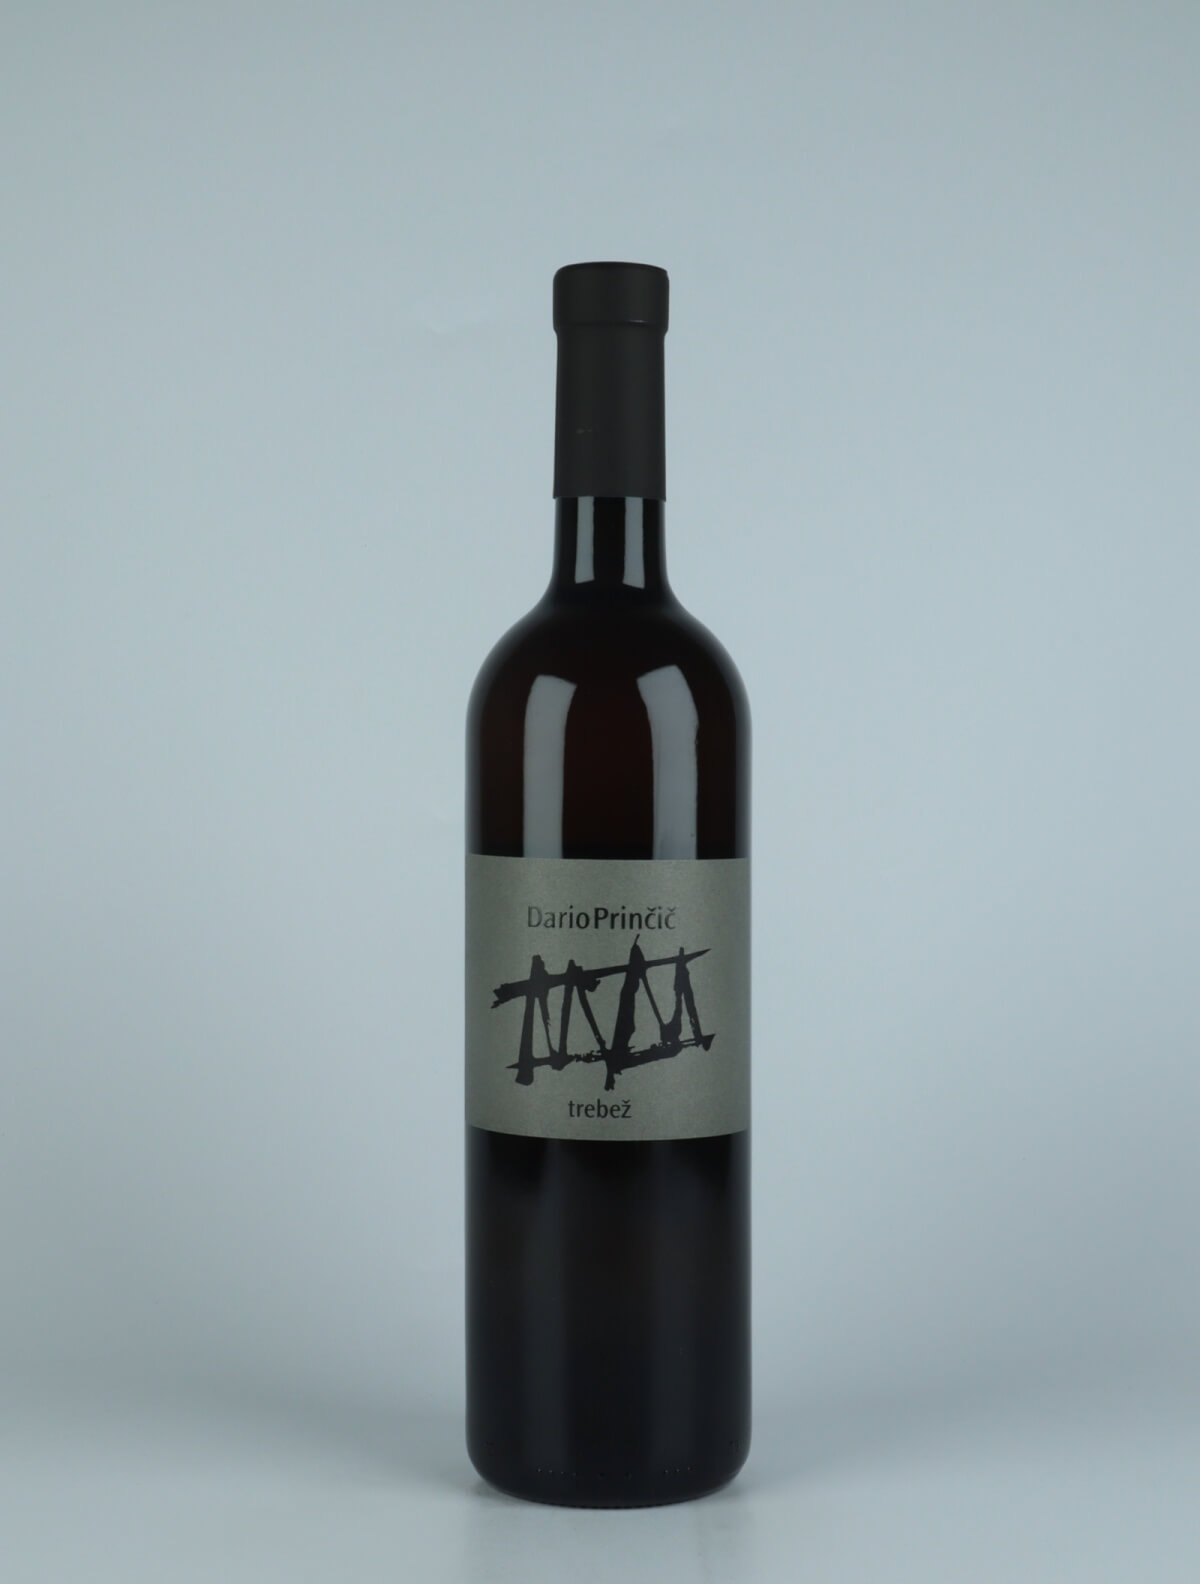 A bottle 2019 Bianco Trebez Orange wine from Dario Princic, Friuli in Italy